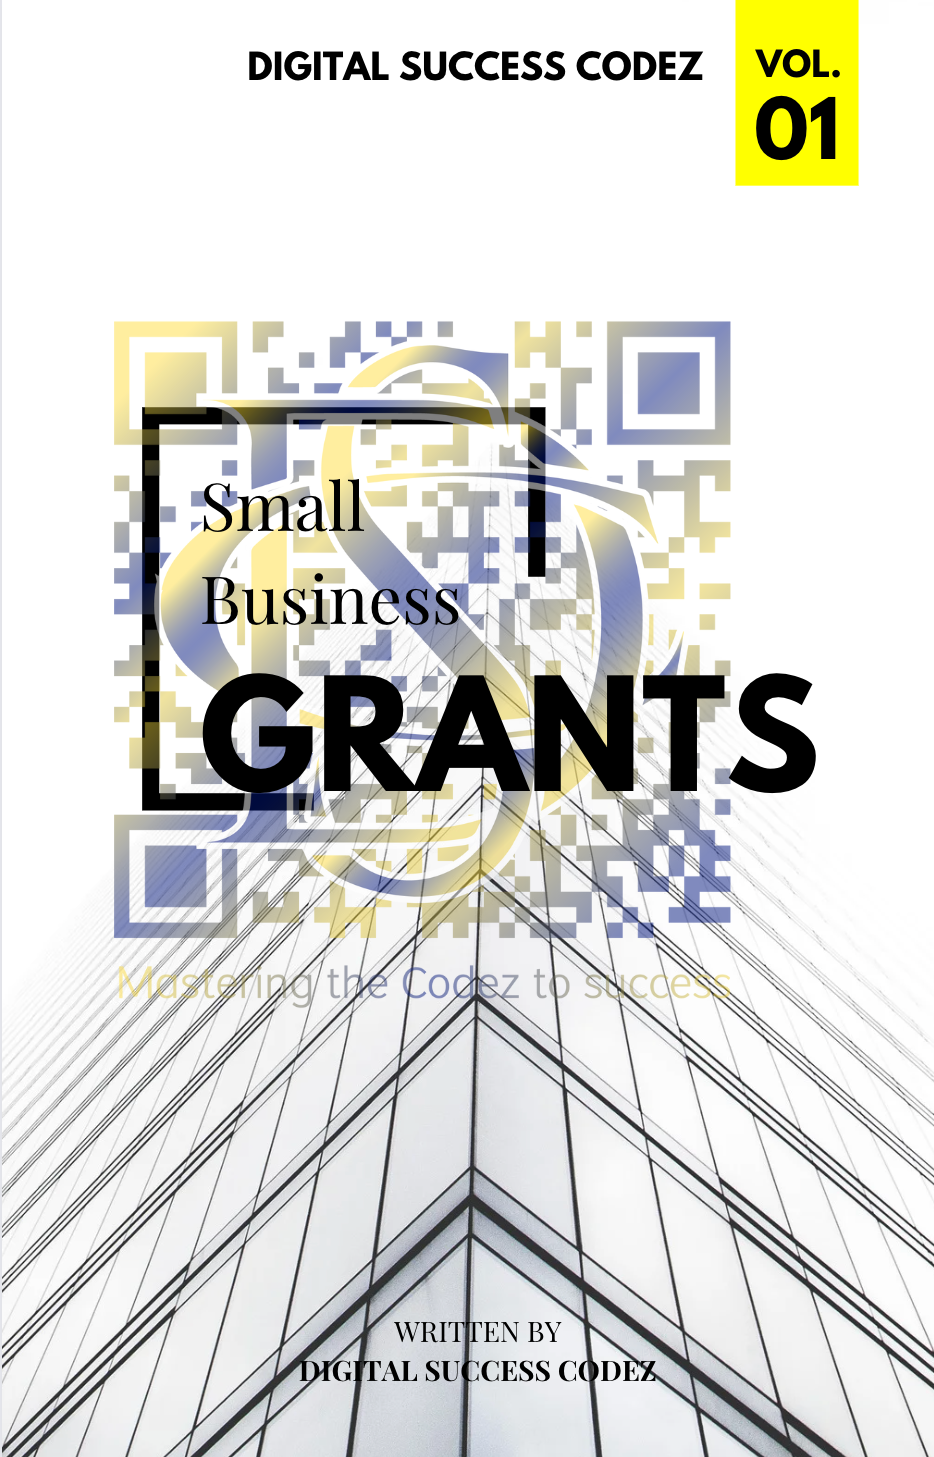 Digital success codez grant list